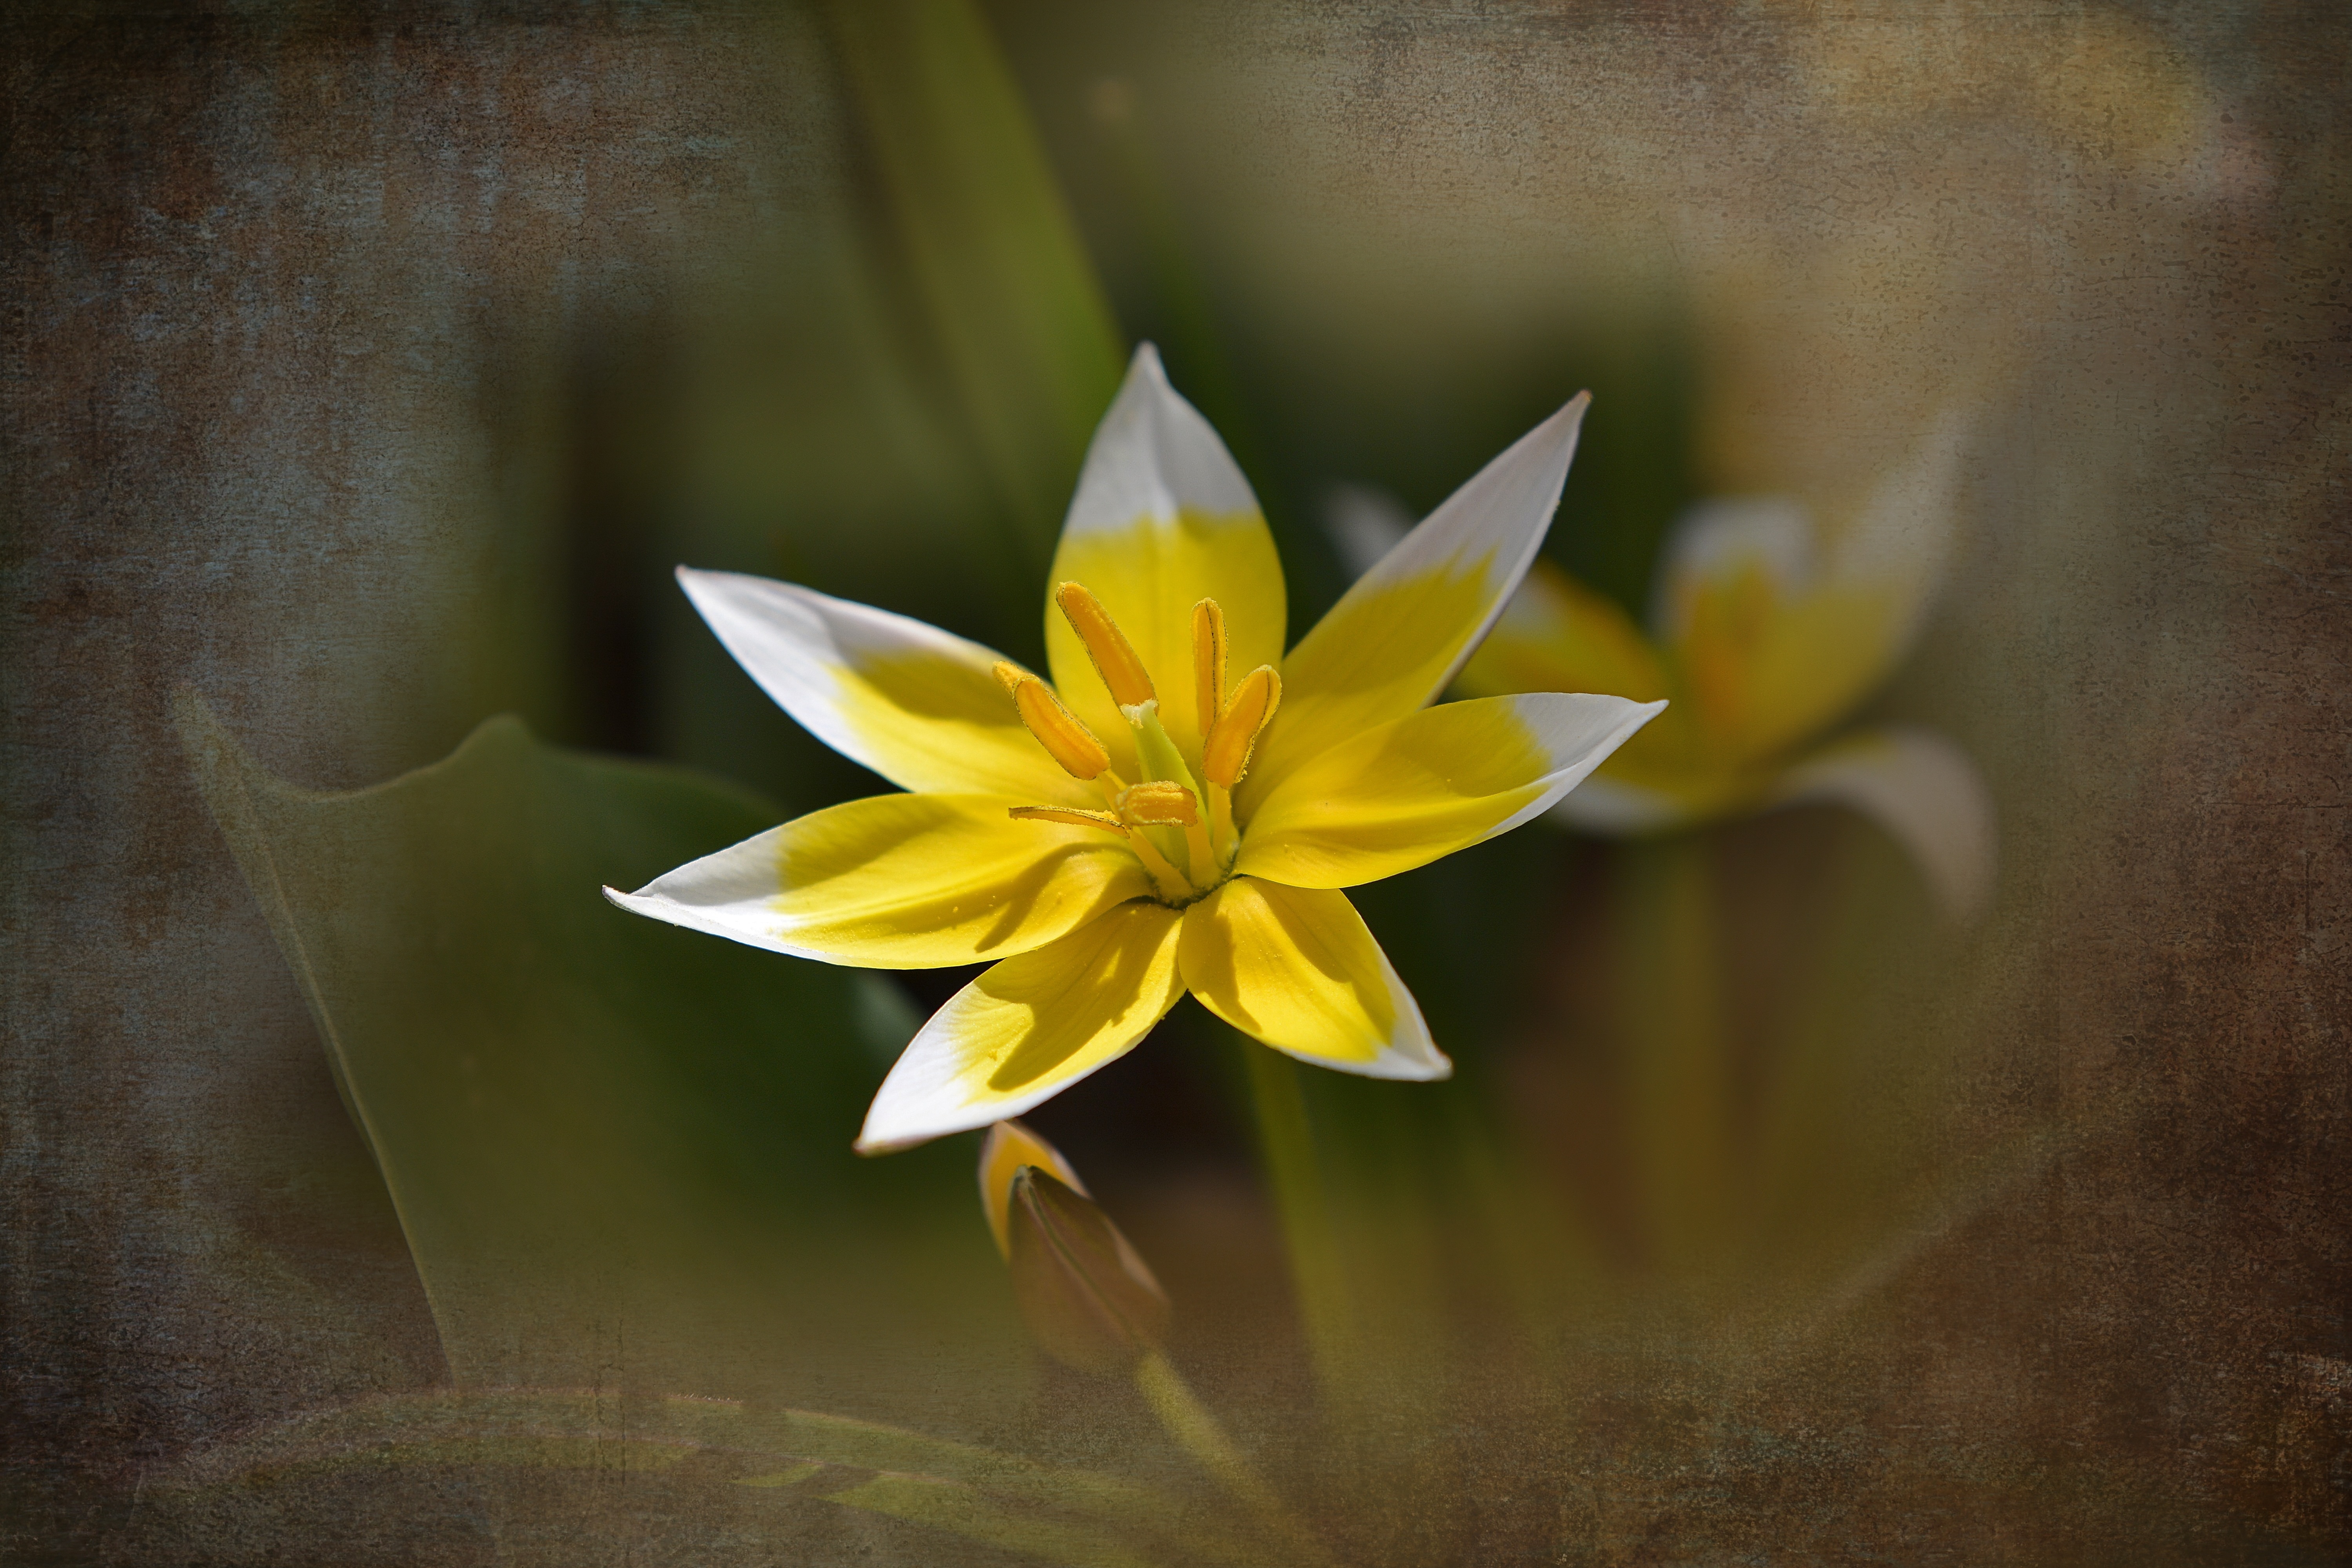 Small Star Tulip, Star Tulip, Flower, flower, fragility